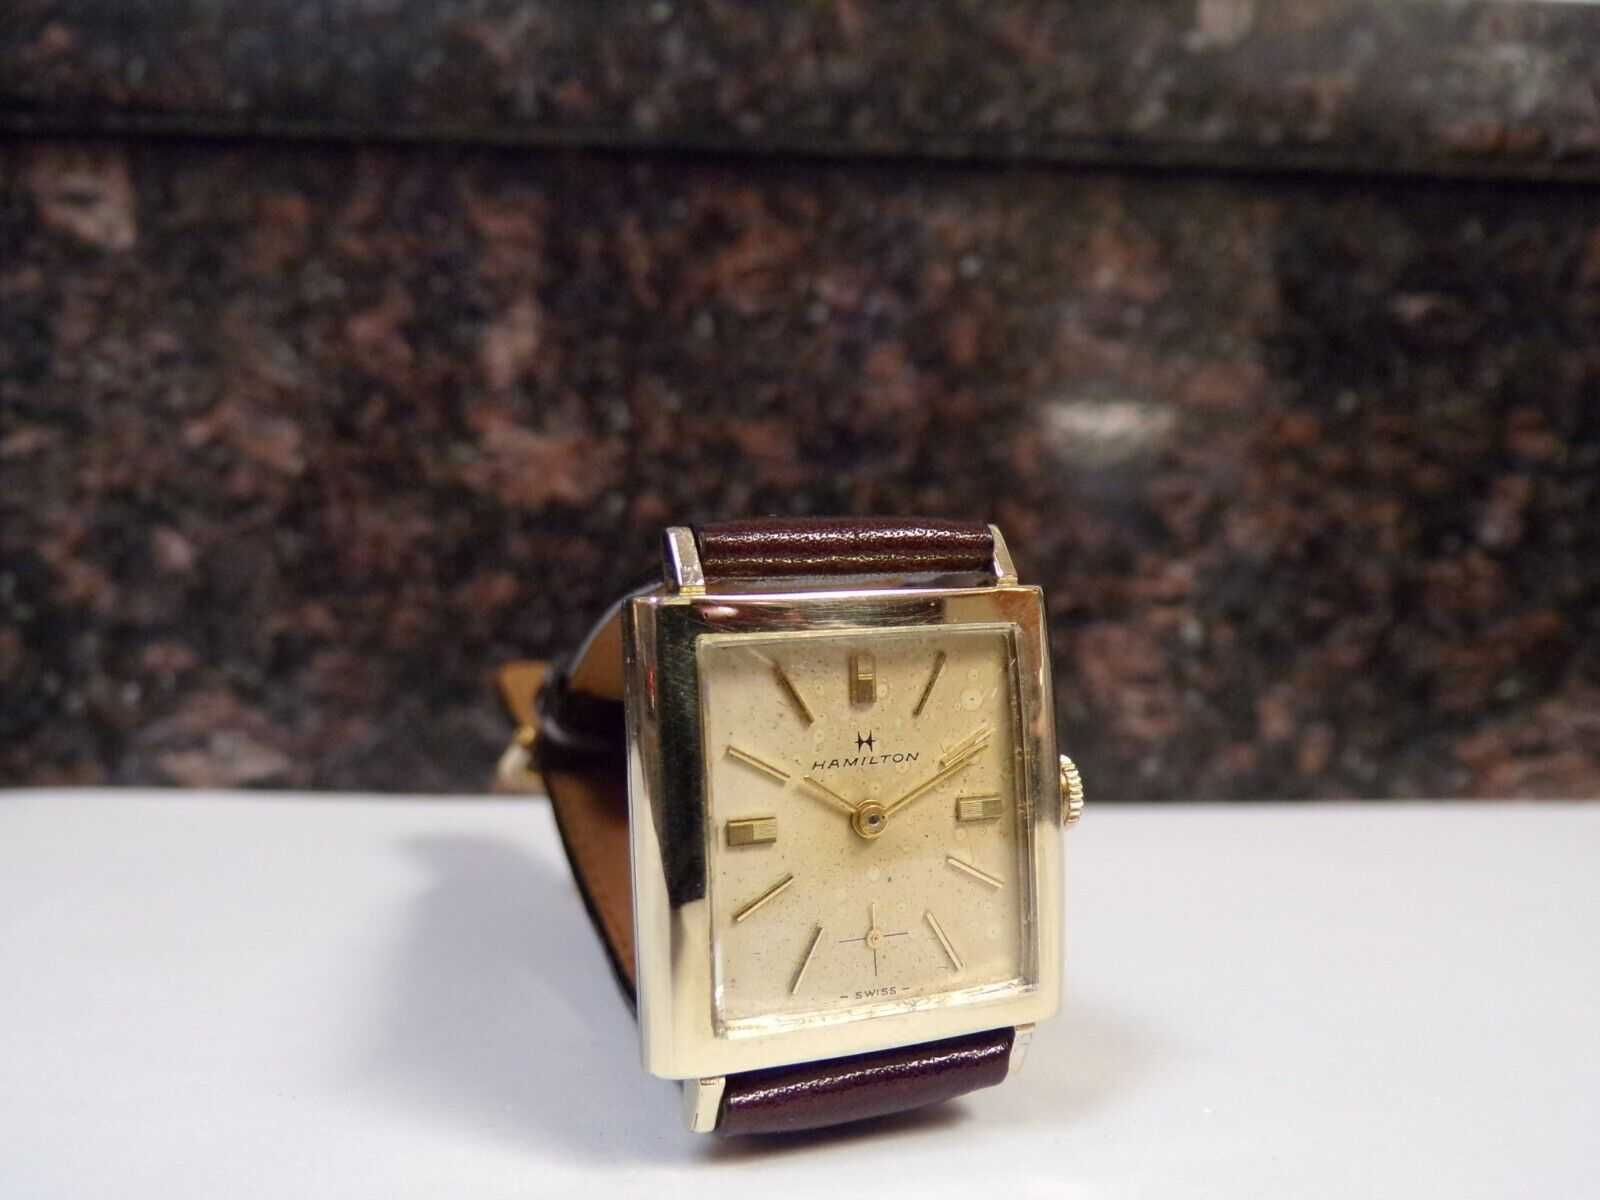 Szwajcarski zegarek Hamilton vintage kostka